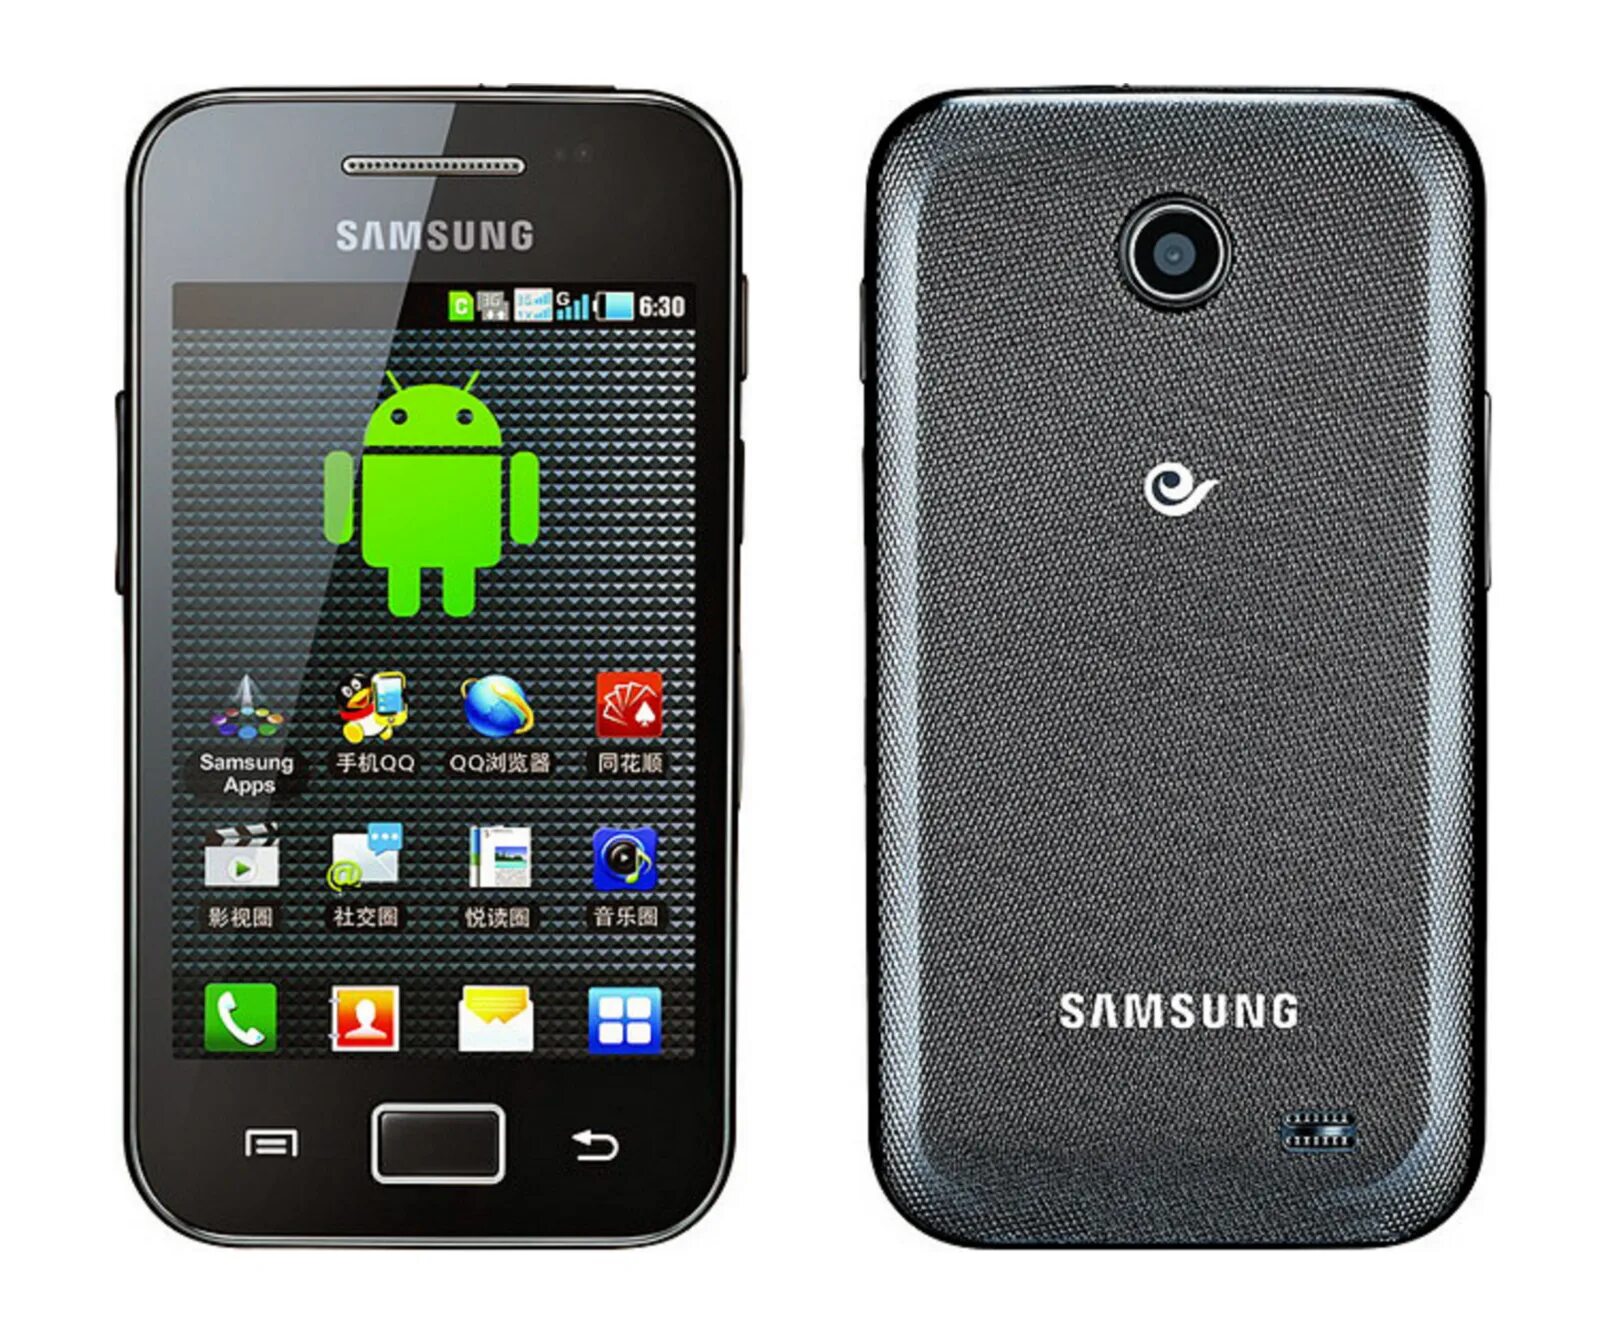 Самсунг галакси айс 1. Samsung Ace 1. Списунг гелакси Эйс 3. Самсунг Гэлакси Эйс 1. Телефоны андроид новосибирск